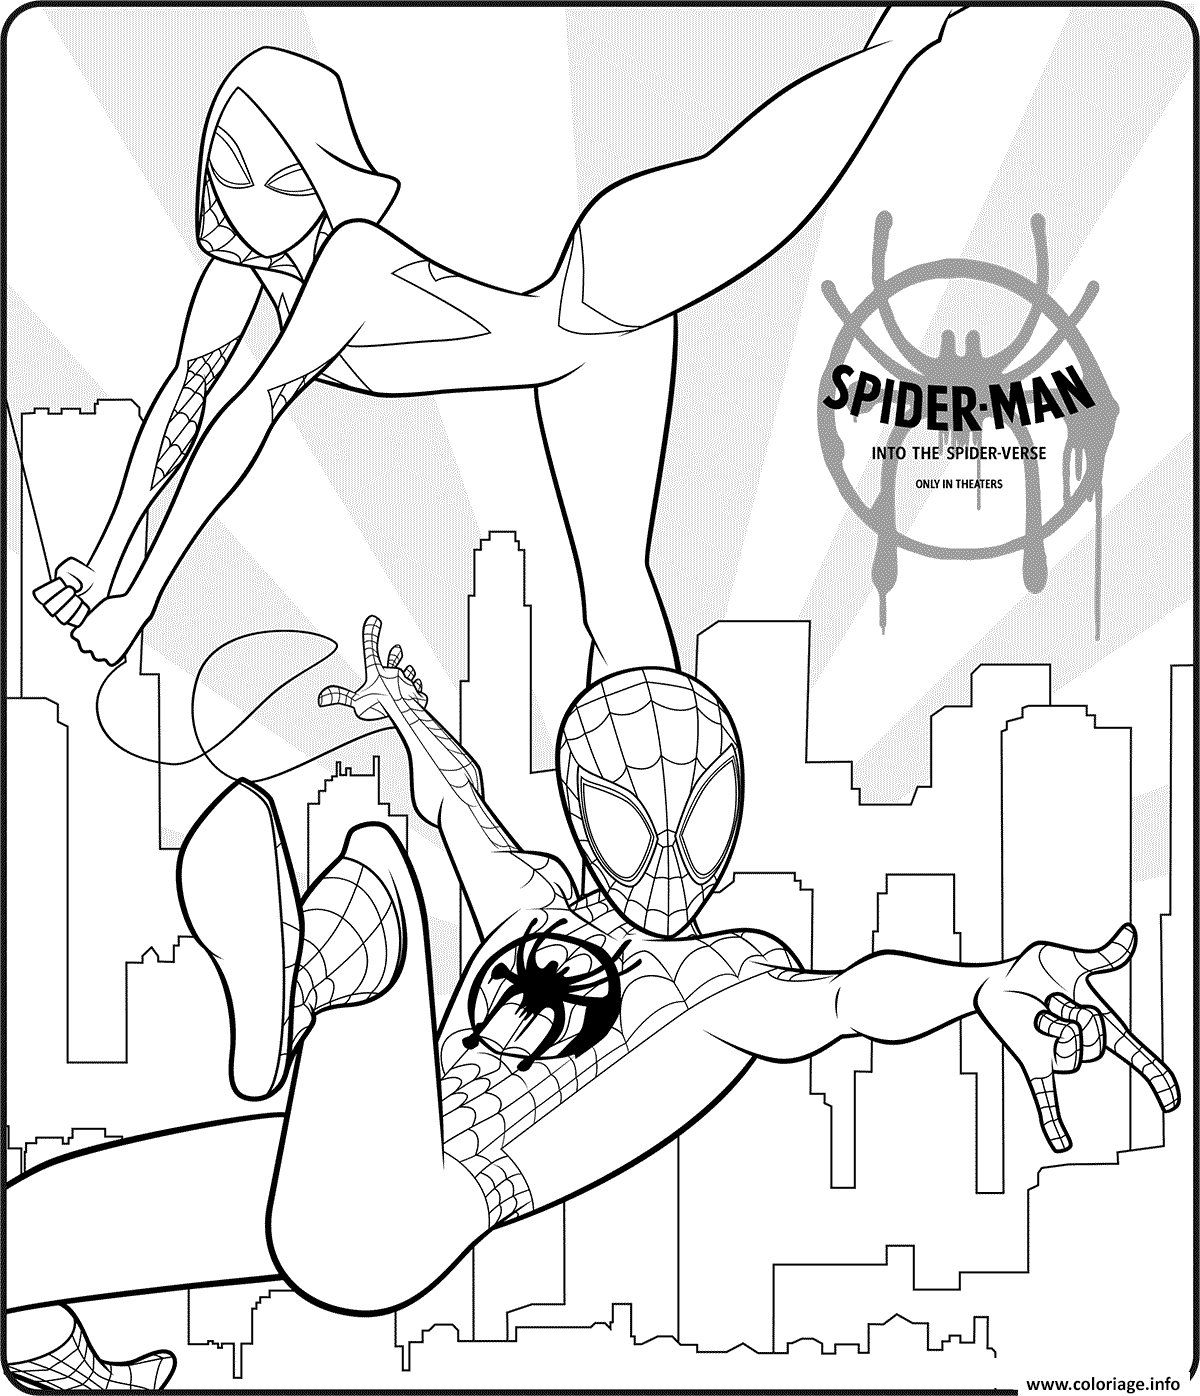 Coloriage Spider Man Into The Spider Verse dessin